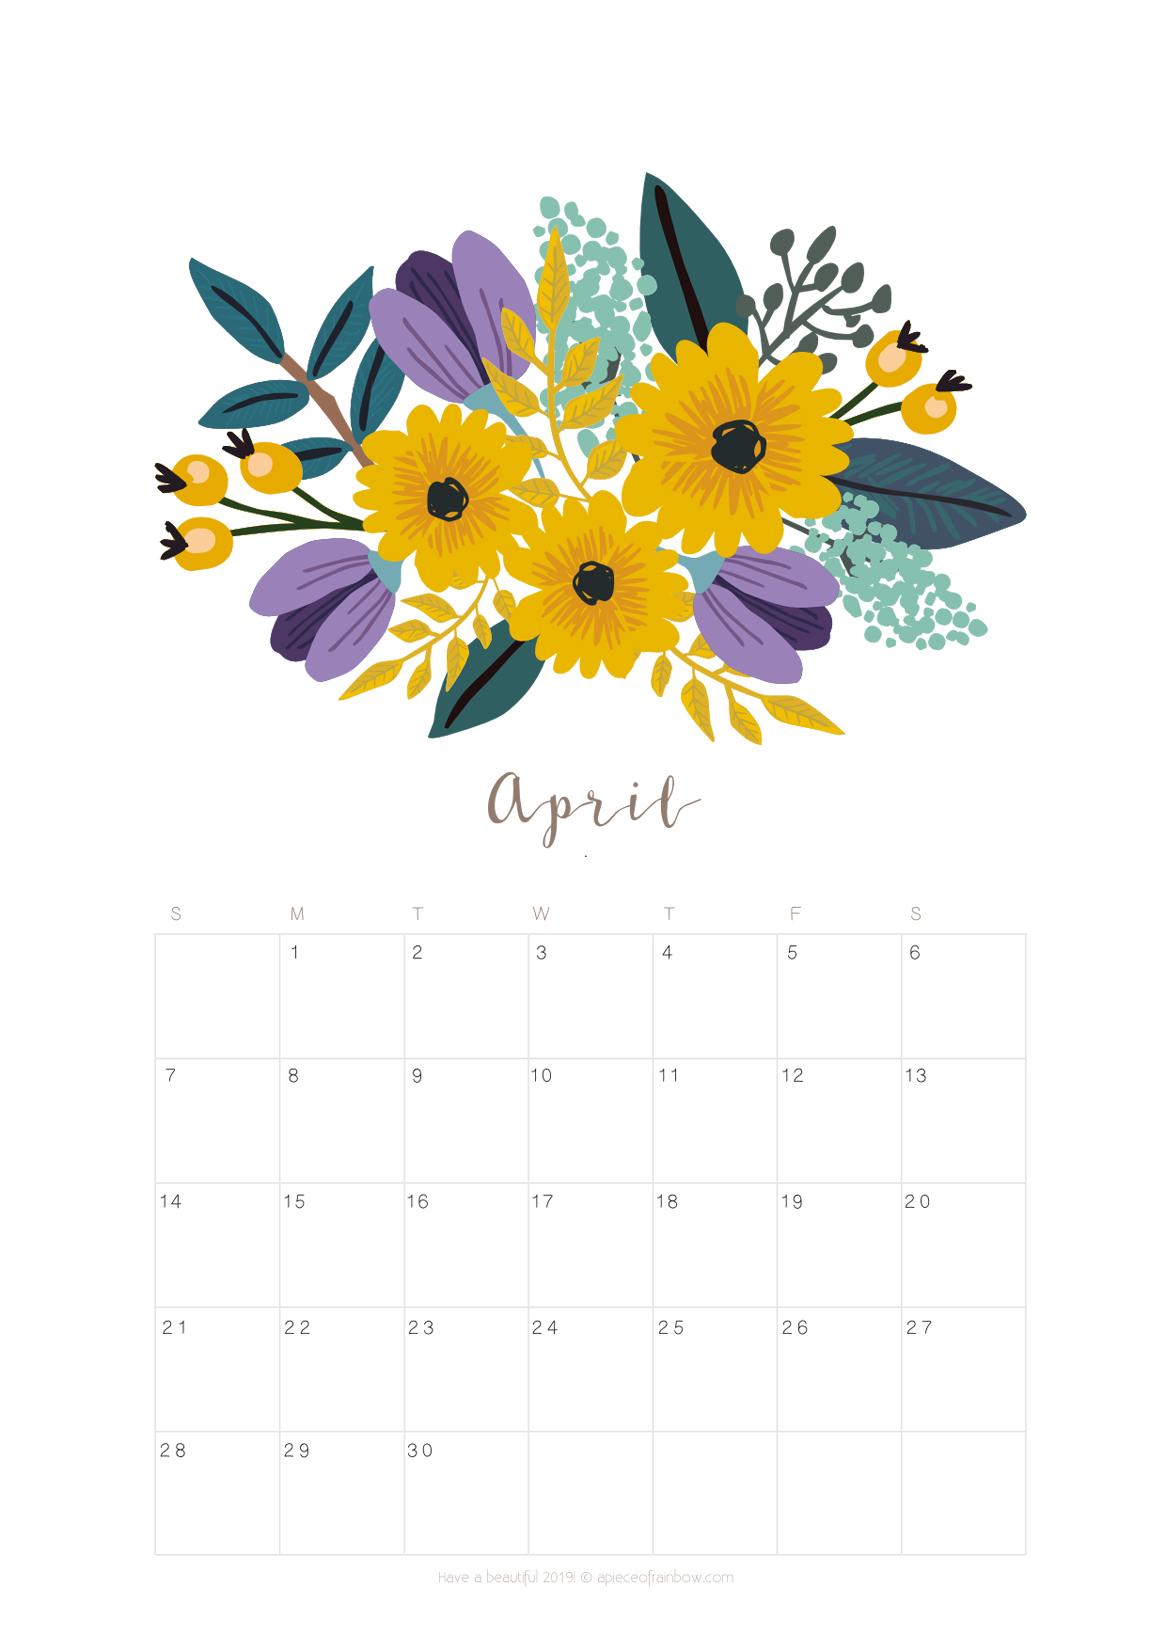 Cute April 2019 Calendar Wallpaper Floral Image Wall Designs